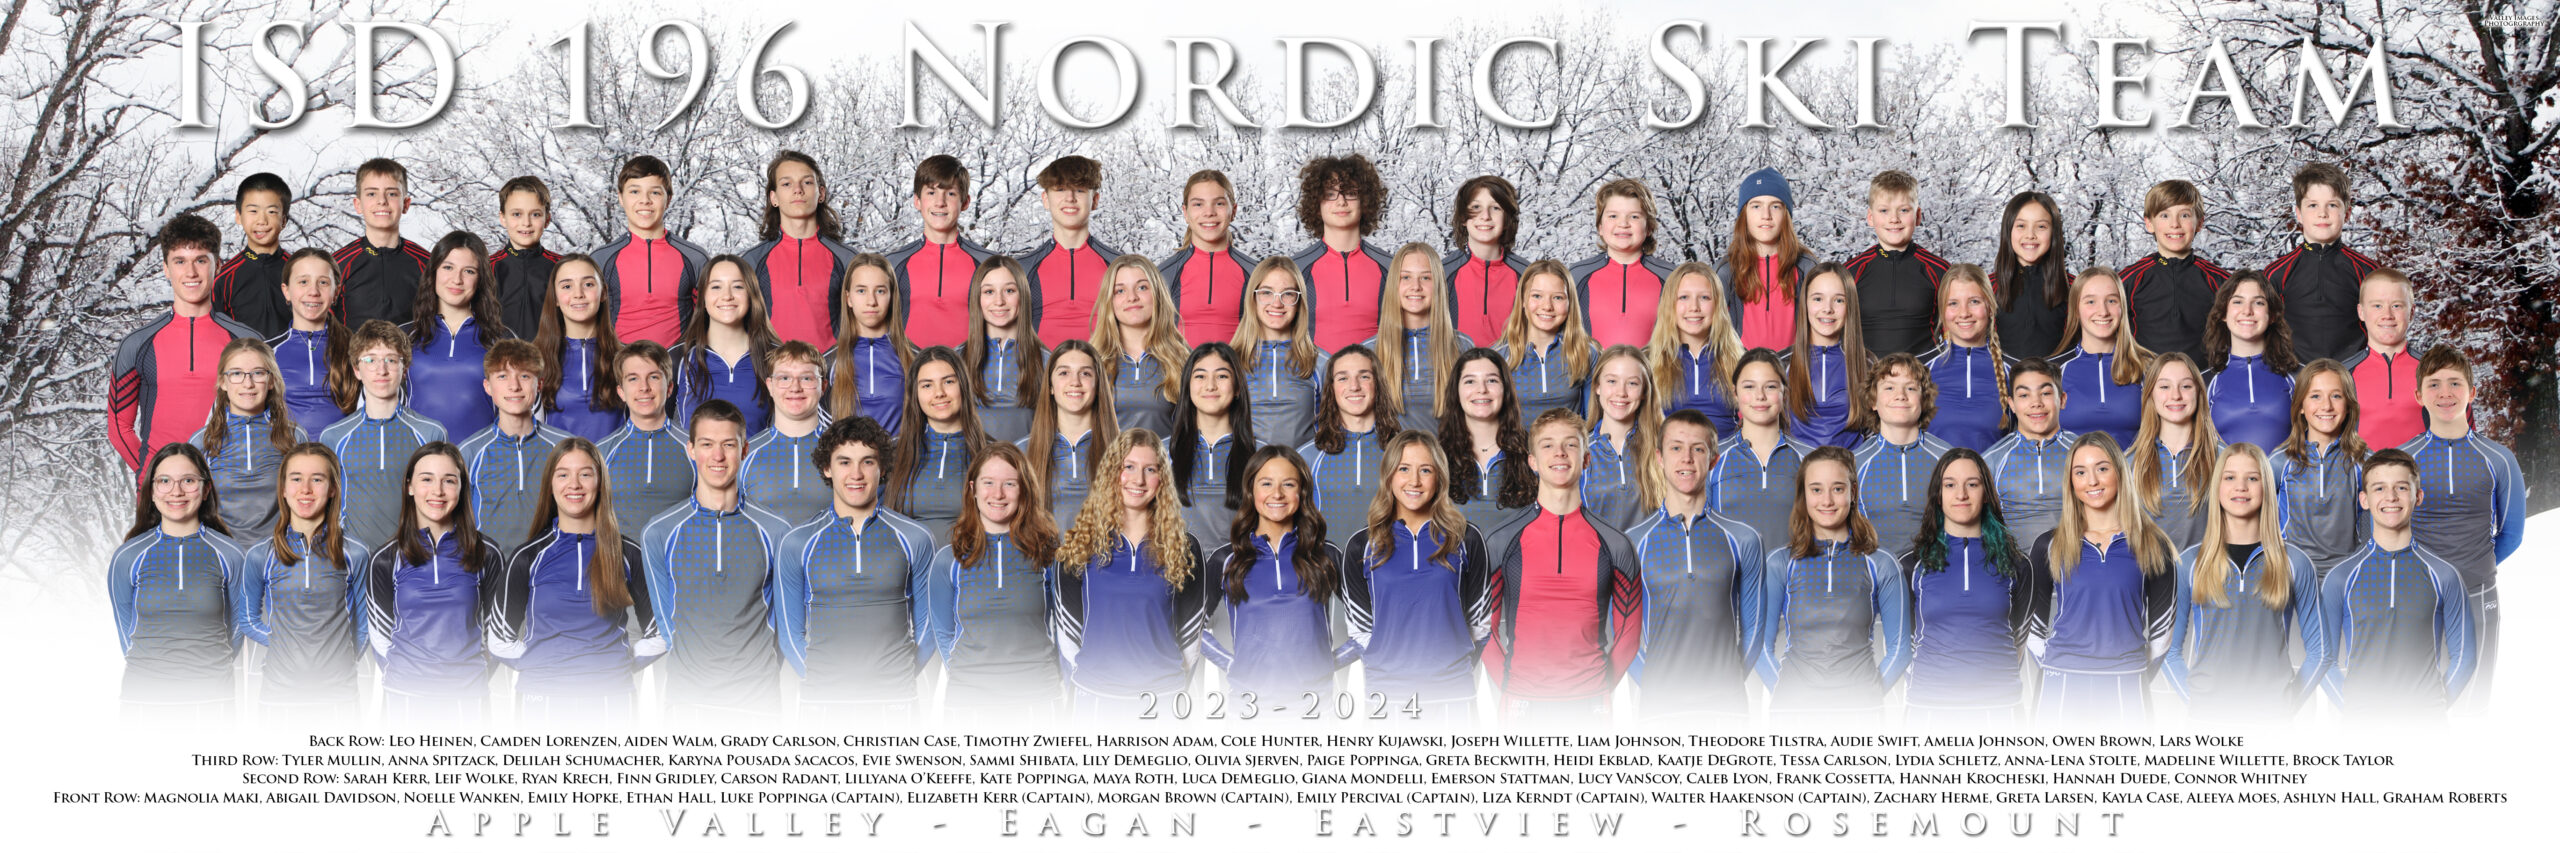 196 Nordic team photo